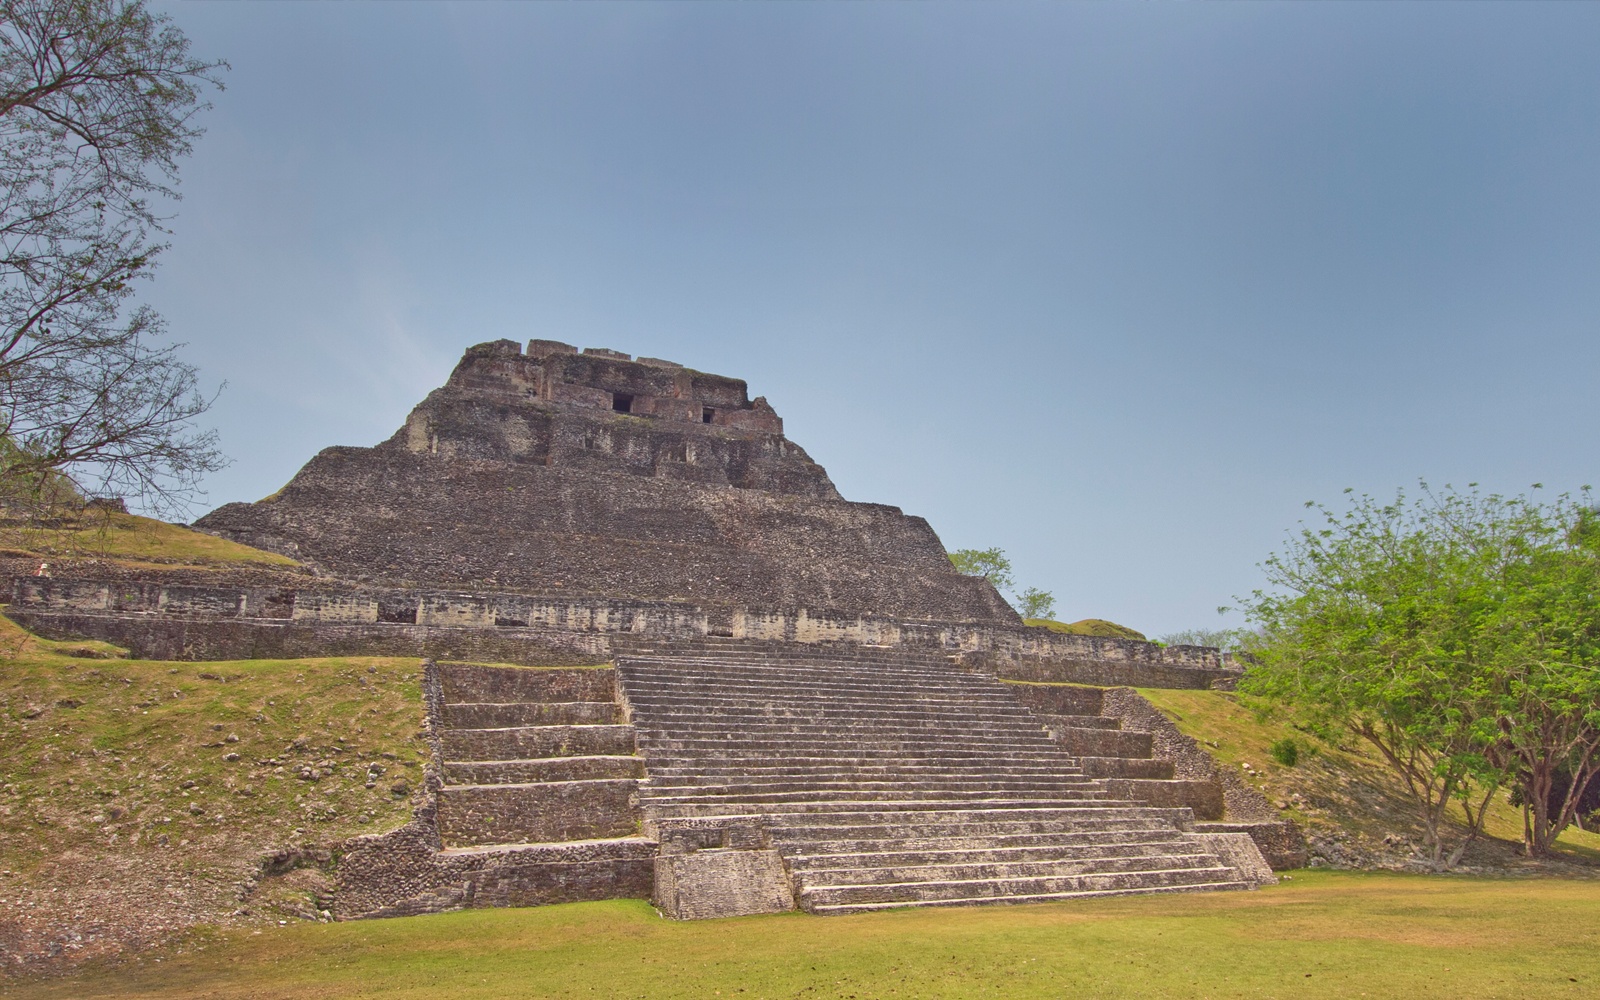 travel tip: Belize has lots of Mayan ruins